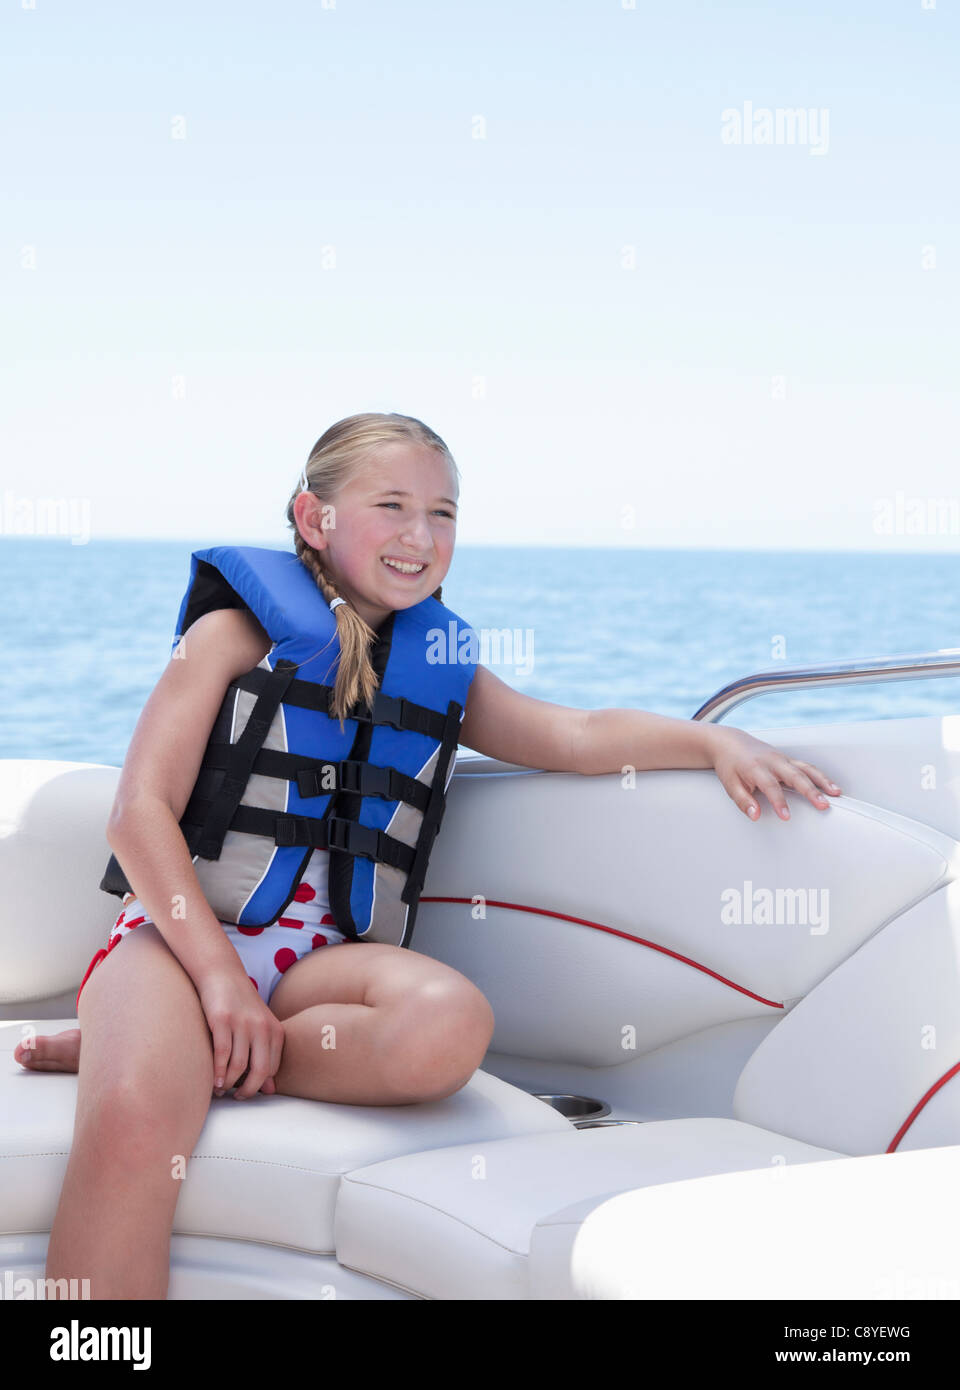 USA, Florida, St. Petersburg, Smilling girl (10-11) wearing life jacket in speedboat Stock Photo